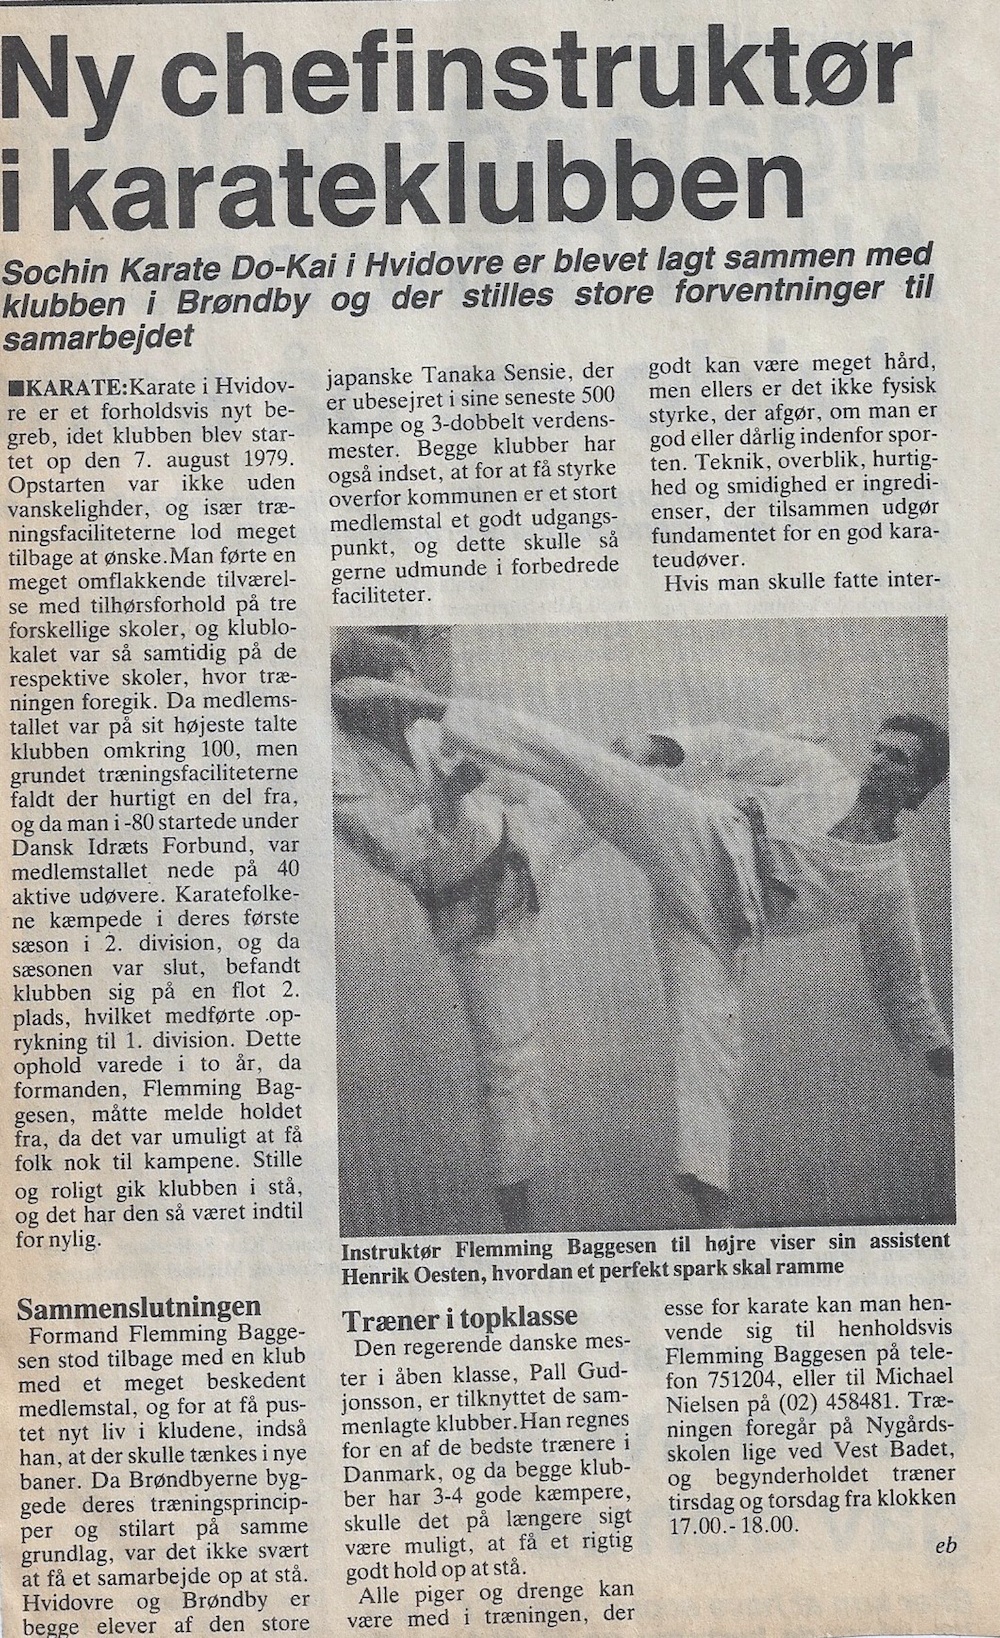 I 1986 fik Sochin Karate ny chefinstruktør - Flemming Baggesen overtog formelt klubben. 